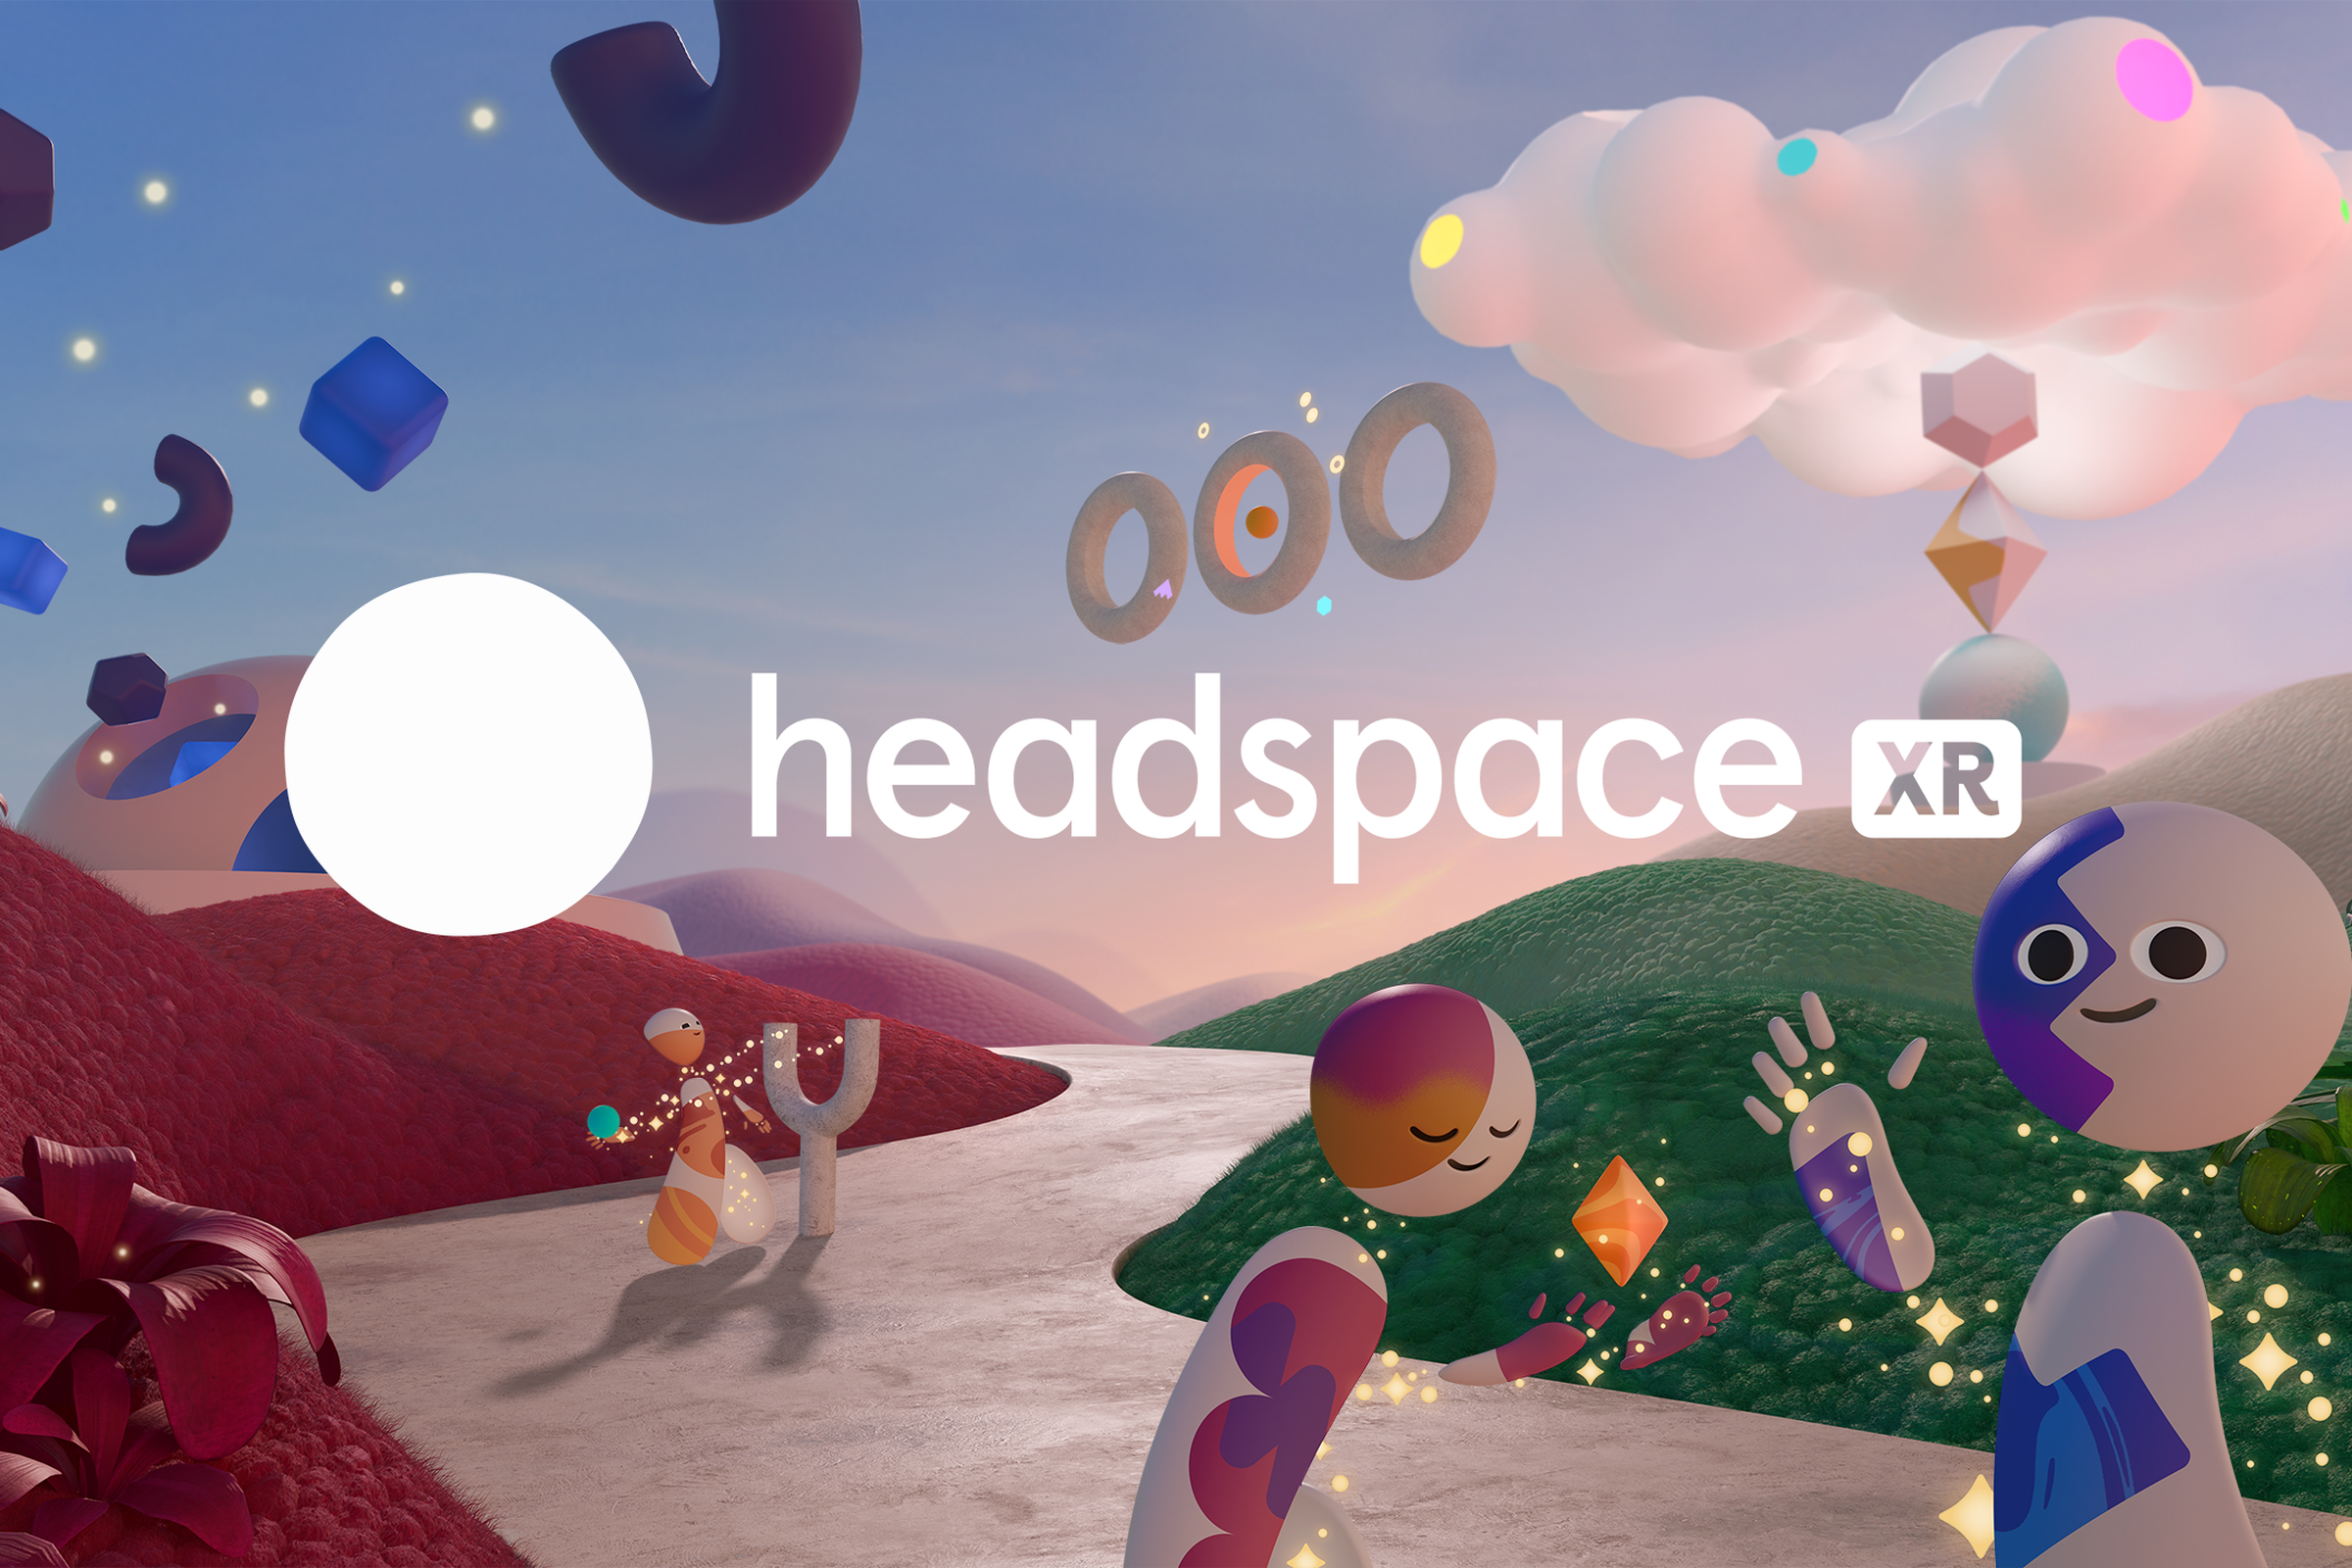 Render of the Headspace XR app